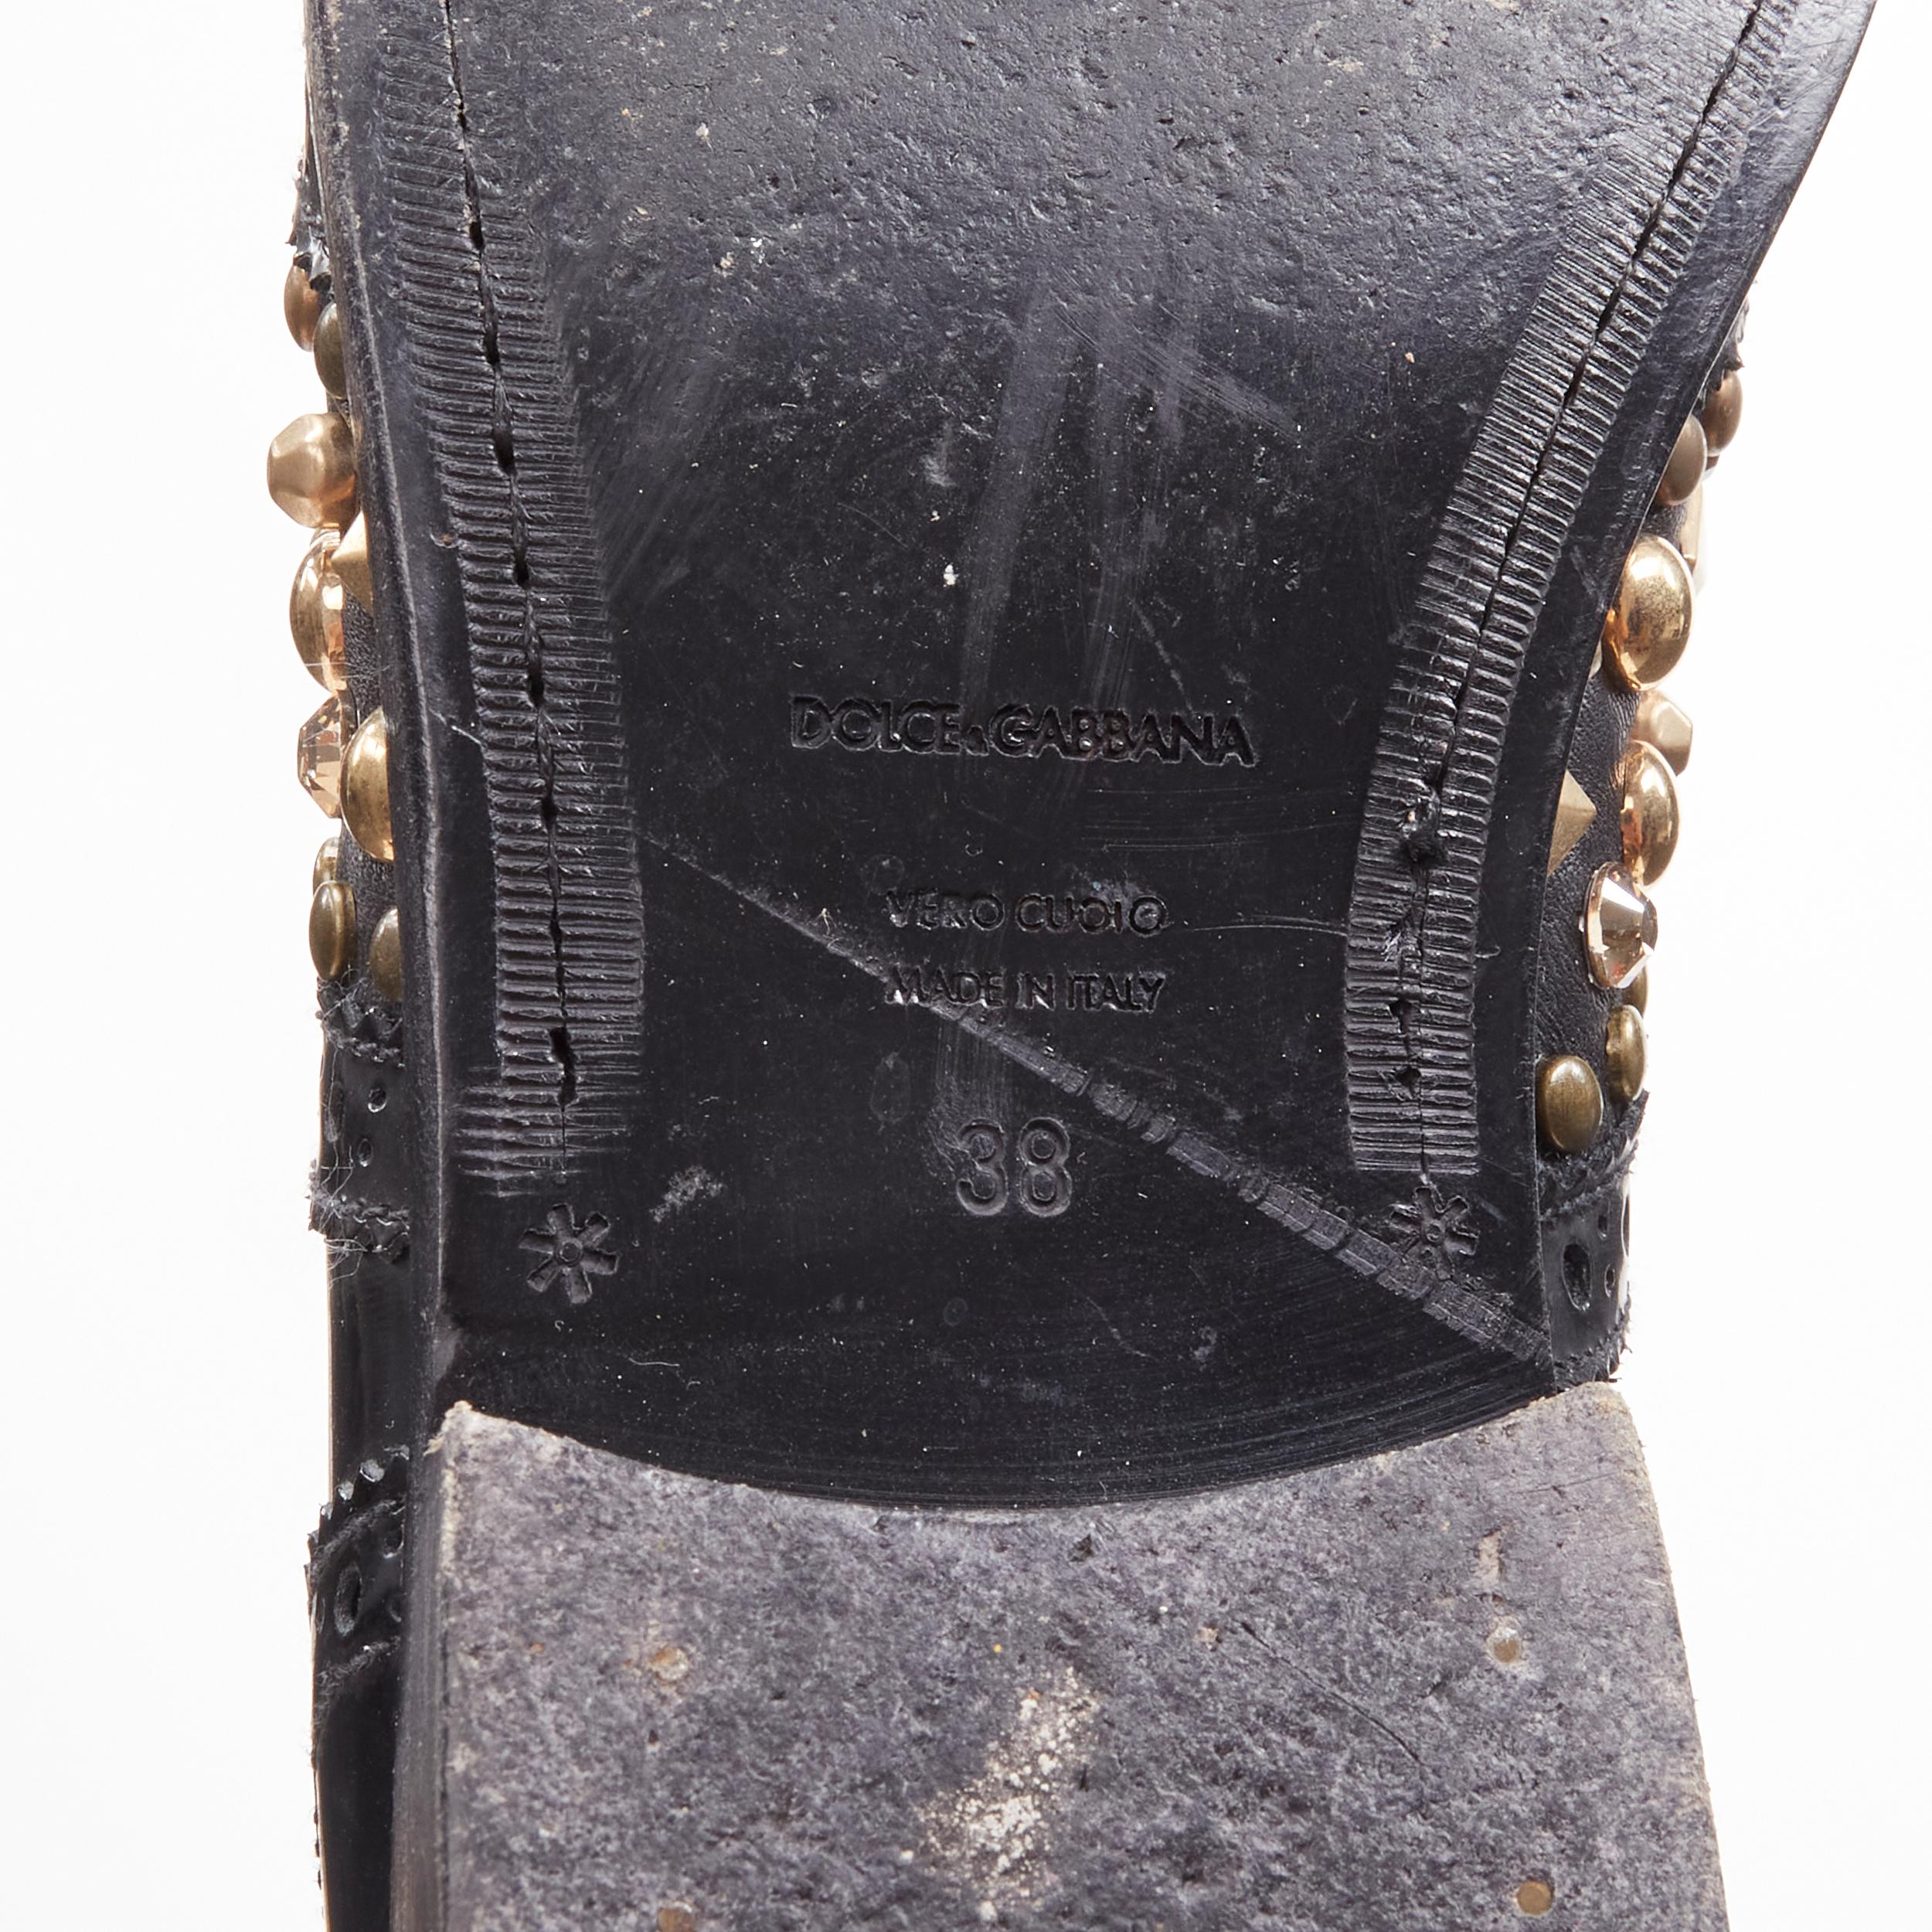 DOLCE GABBANA black gold crystal studded perforated brogue loafer EU38 2